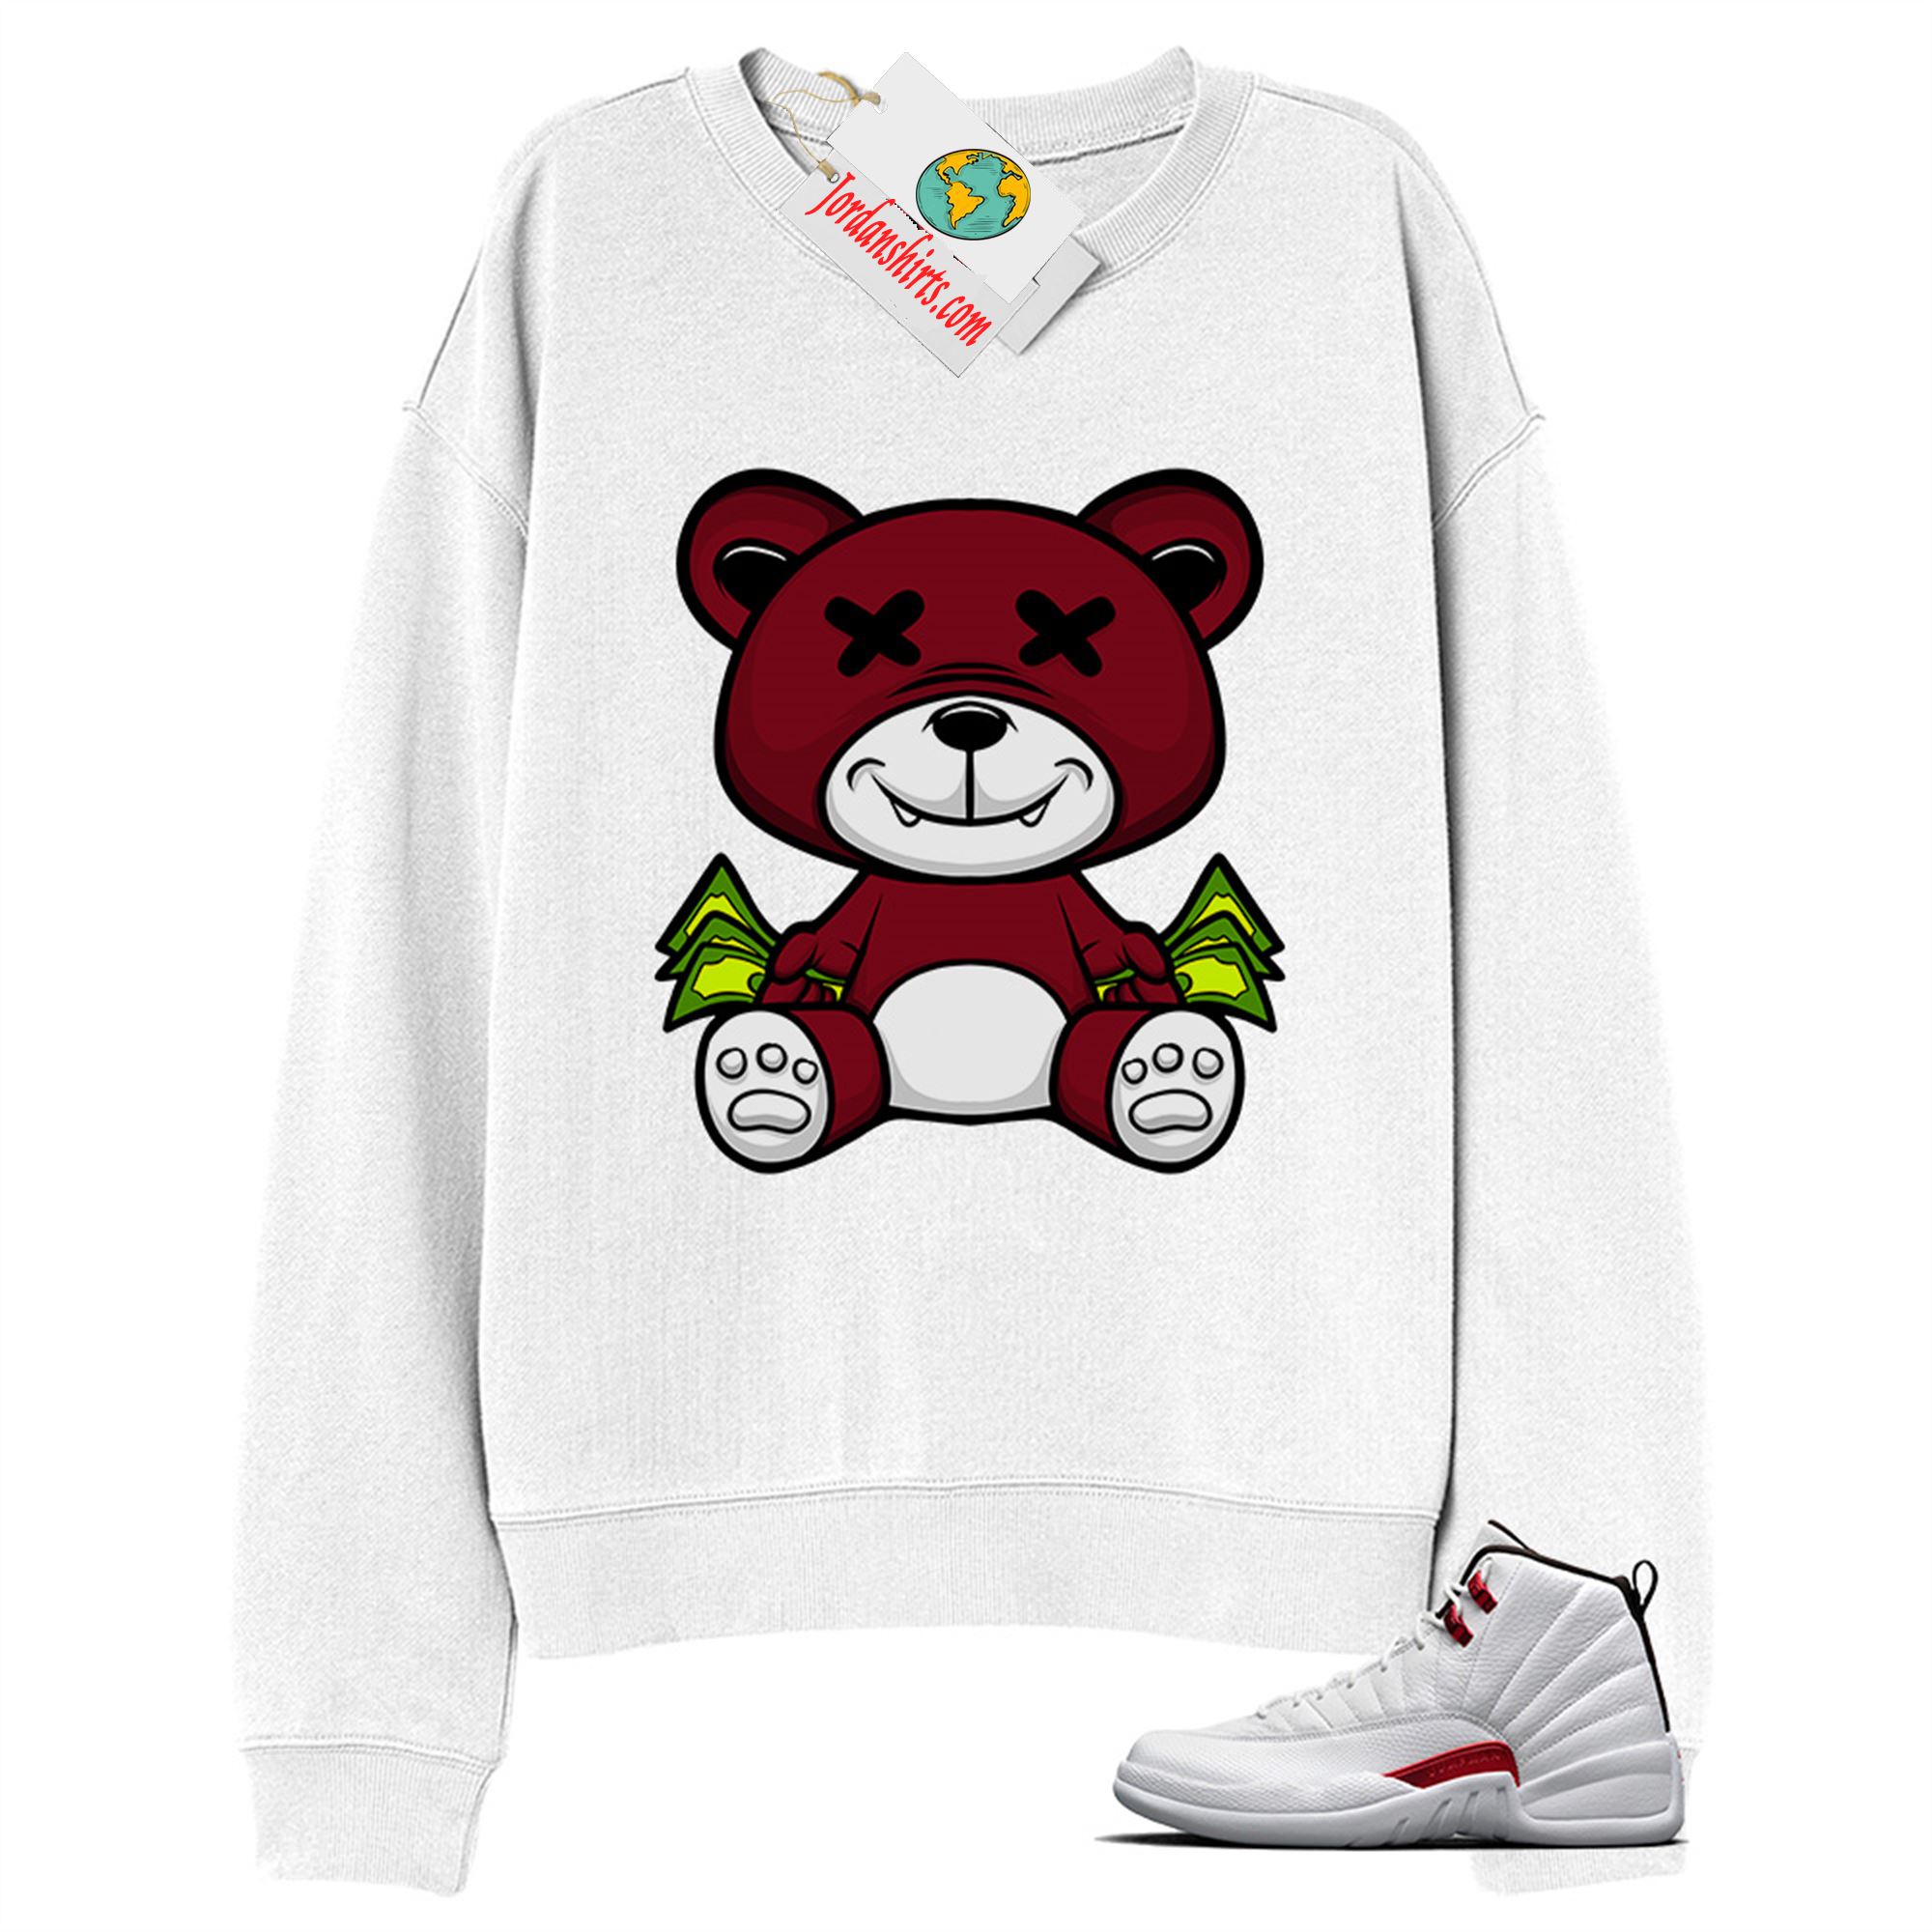 Jordan 12 Sweatshirt, Rich Teddy Bear White Sweatshirt Air Jordan 12 Twist 12s Size Up To 5xl